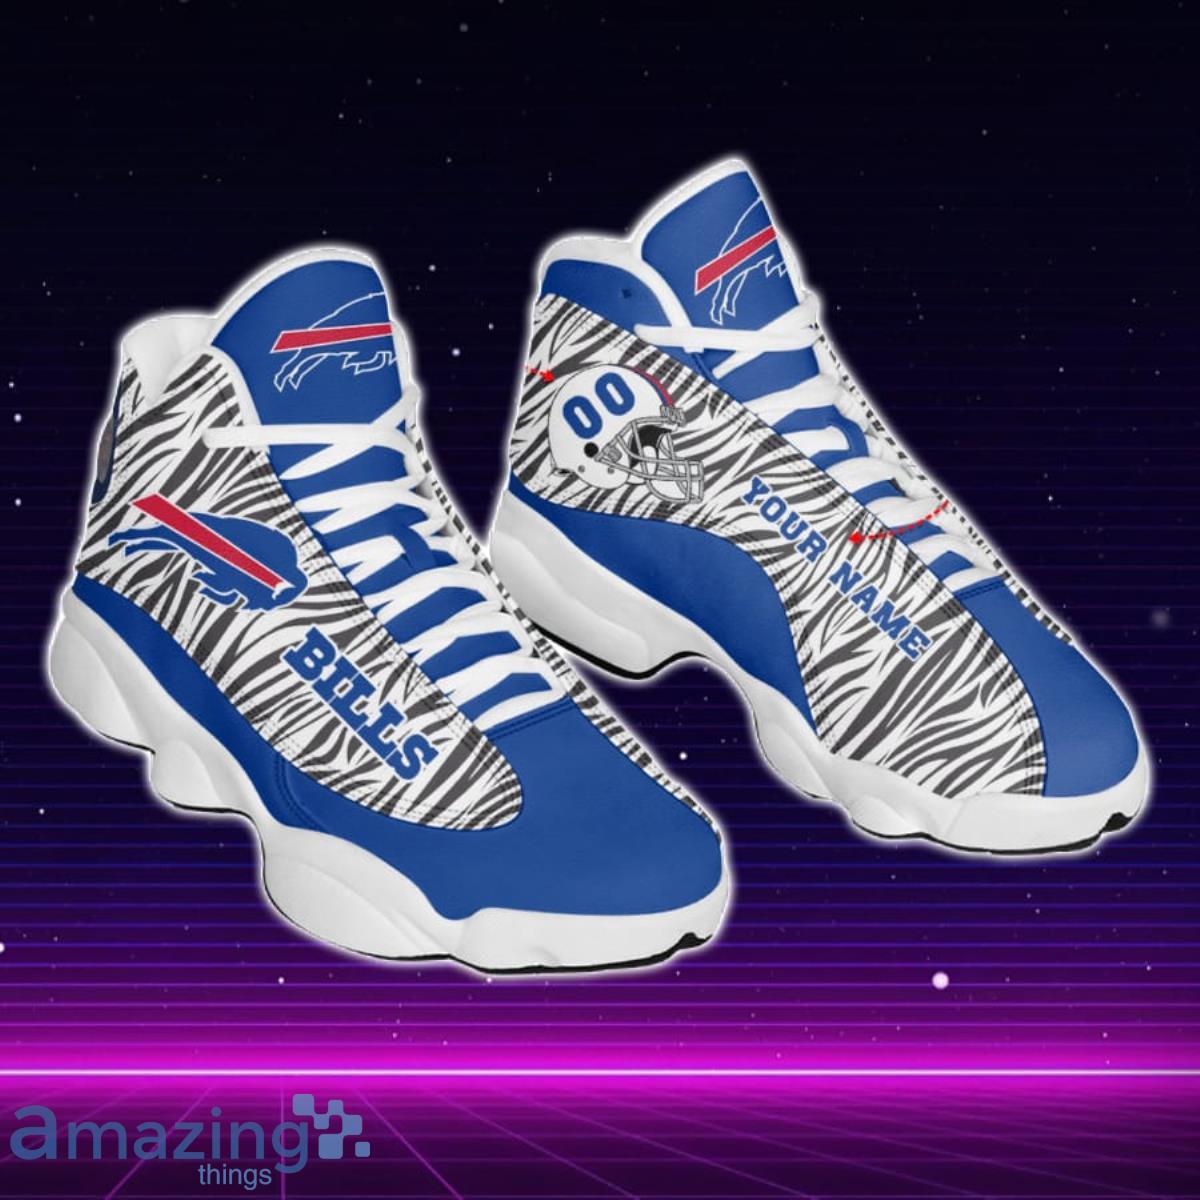 Custom Name Buffalo Bills Air Jordan 13 Sneaker Shoes - Banantees